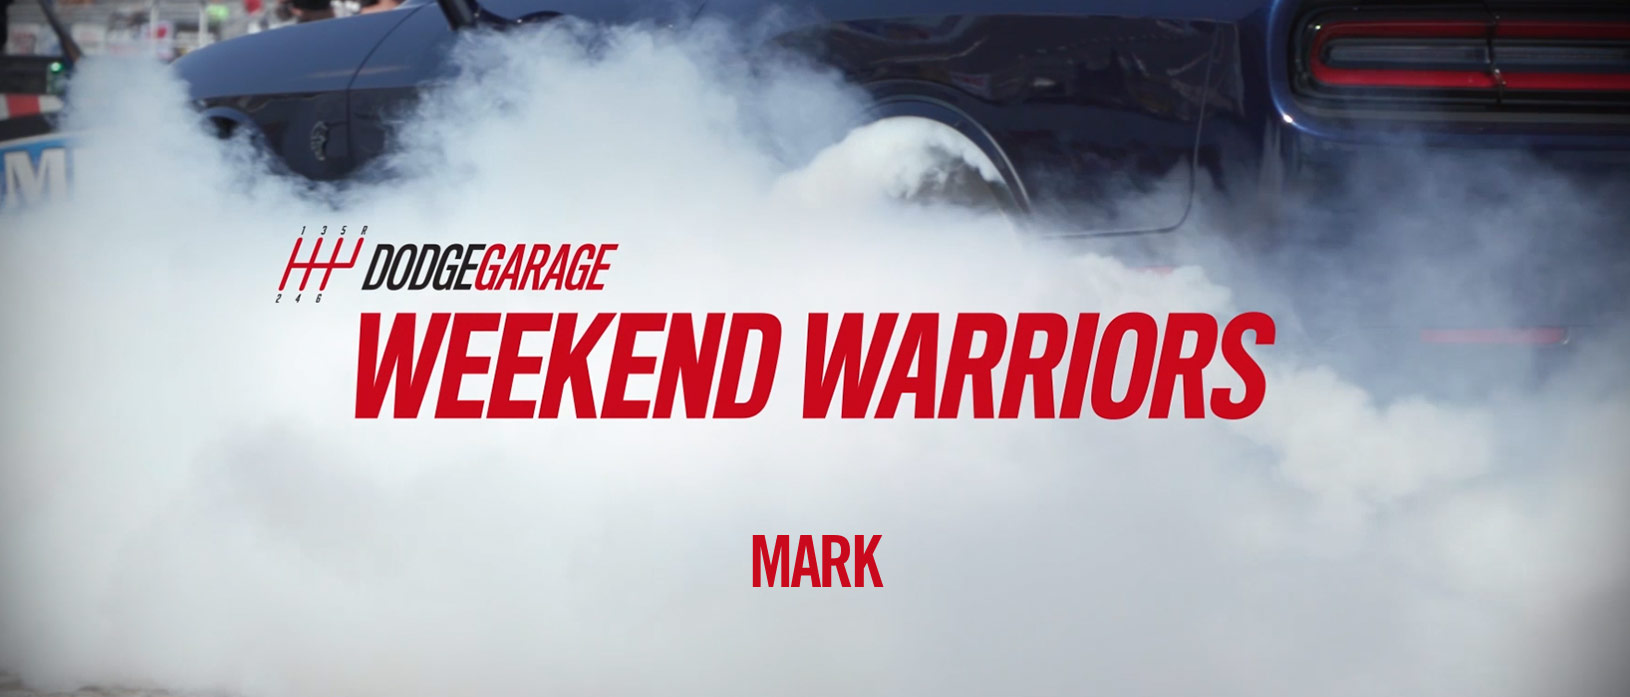 Weekend Warriors Mark